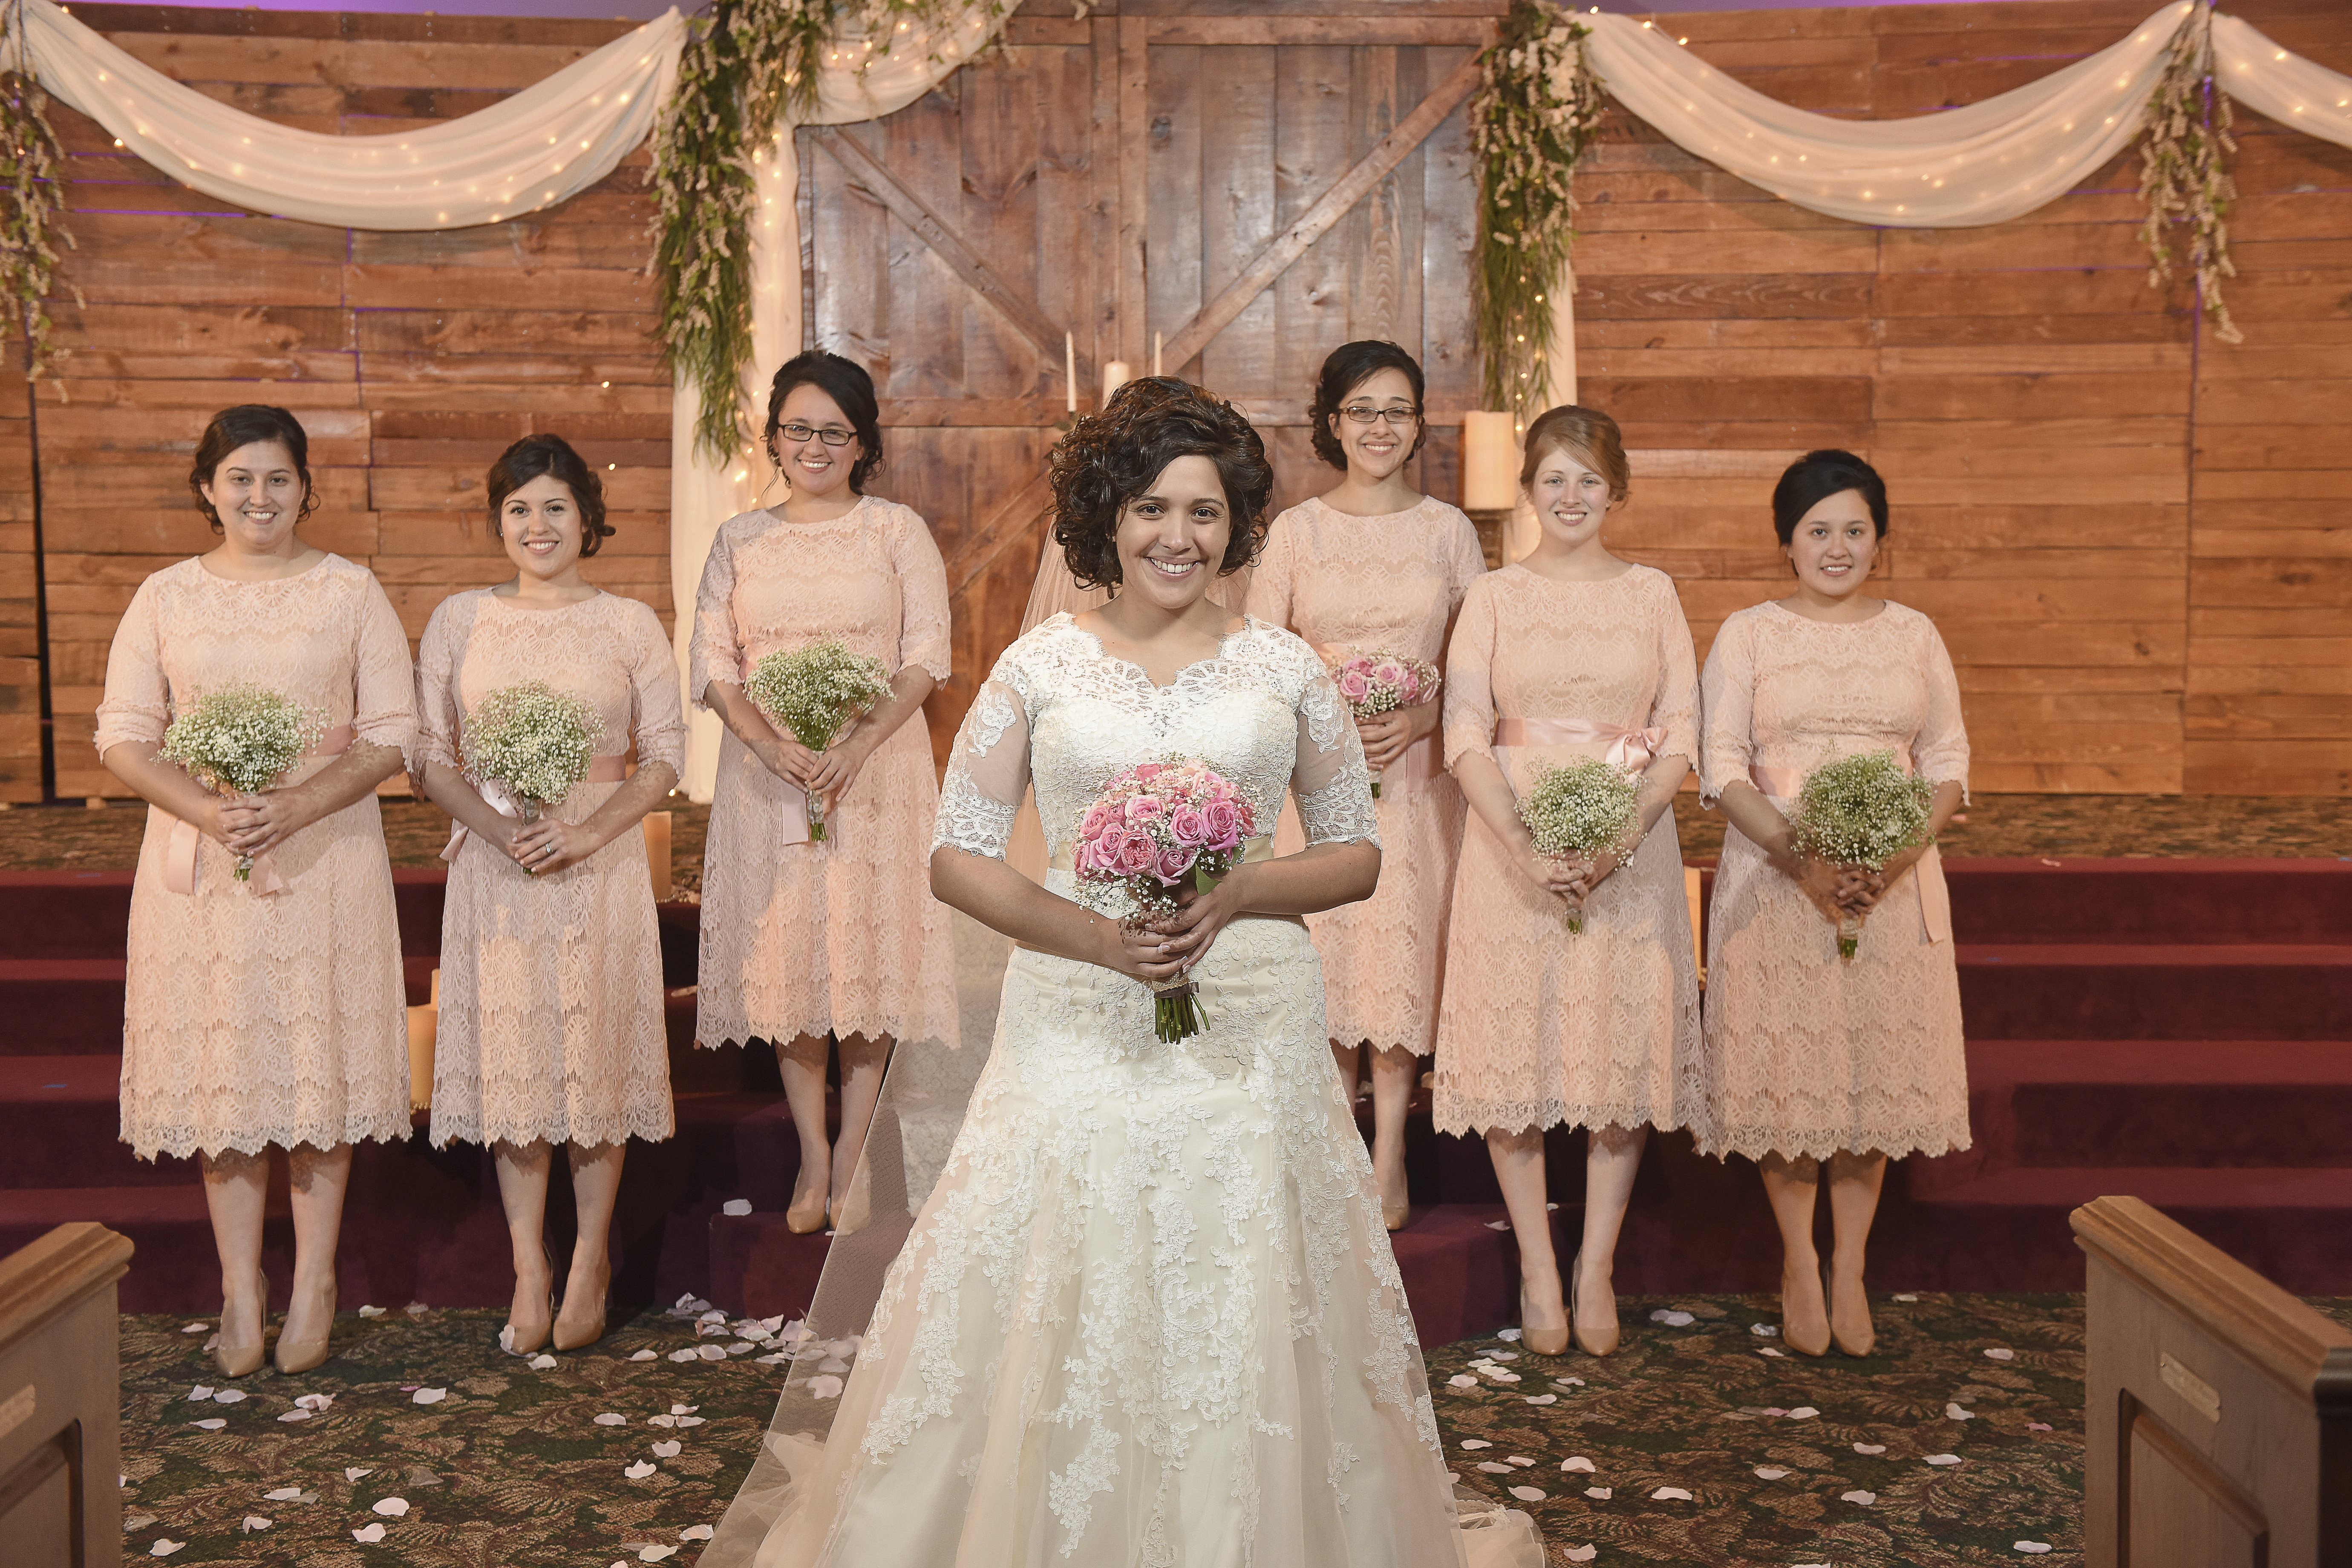 She's Intentional | Jason Smelser, Houston Wedding Photographer